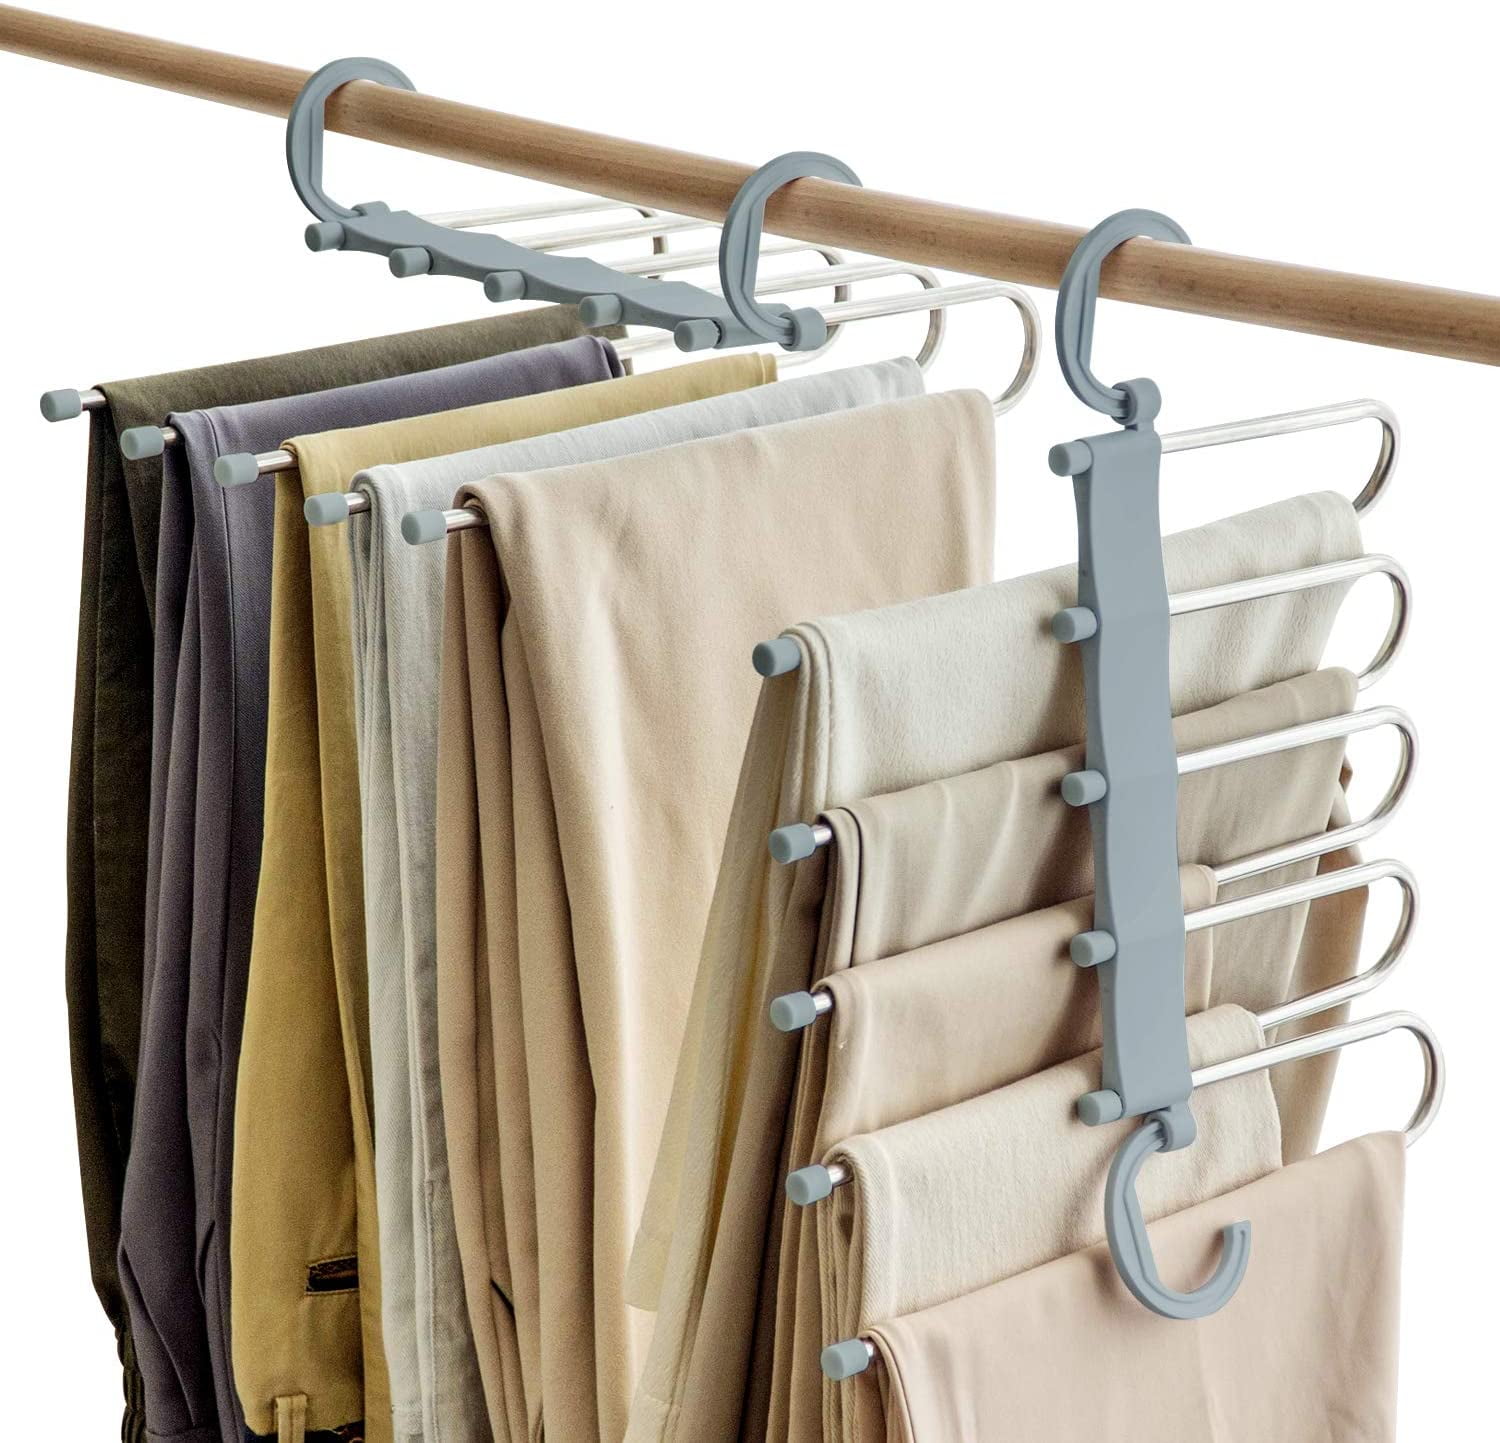 Stainless Steel No-slip Pants//Skirt//Trouser Hangers with 2 Adjustable Grips Clips Sqiuxia 10 Packs Metal Space Saver Hangers